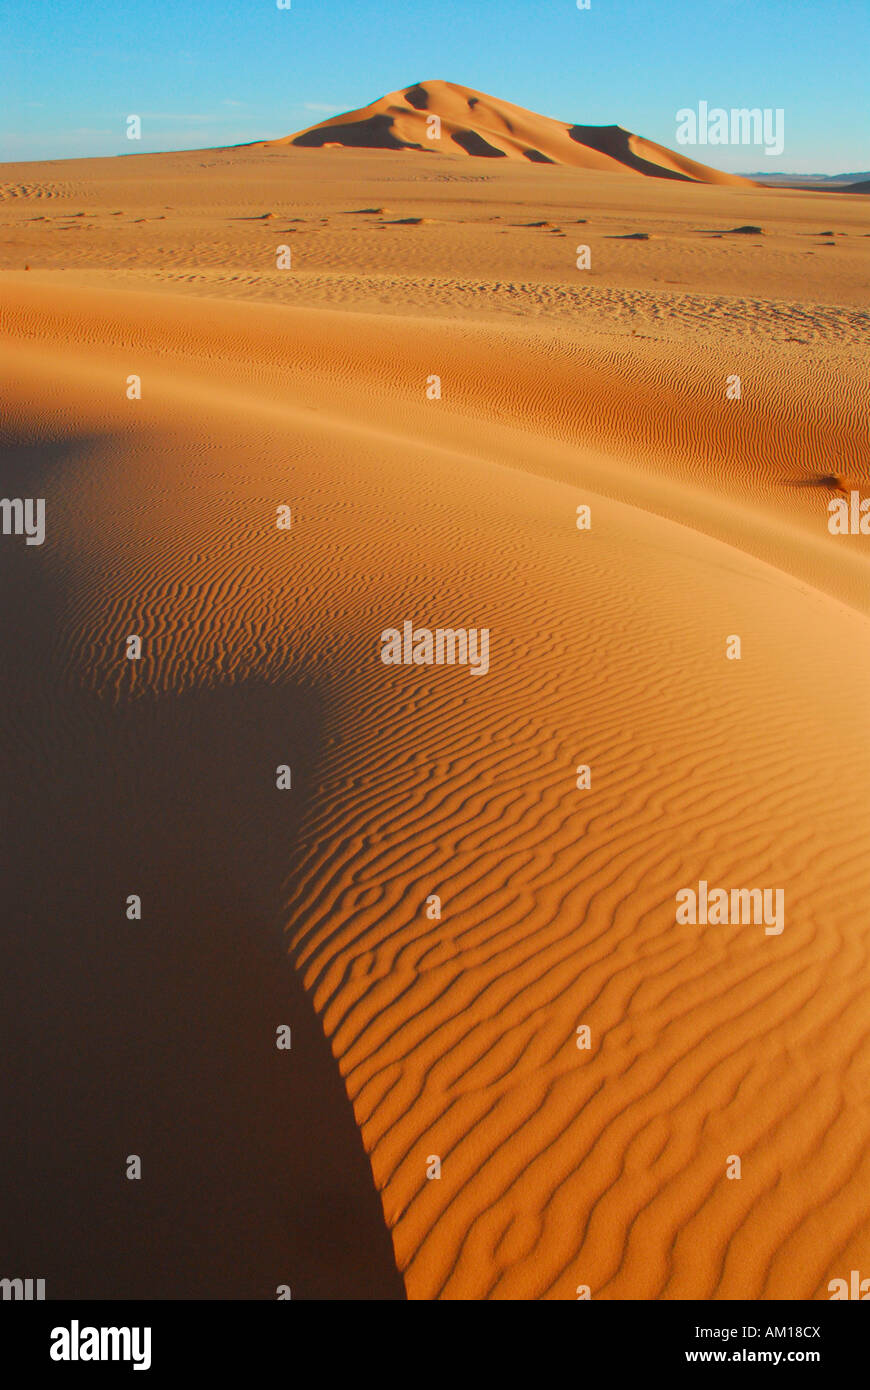 Sand dunes, Murzuq desert, Libya Stock Photo